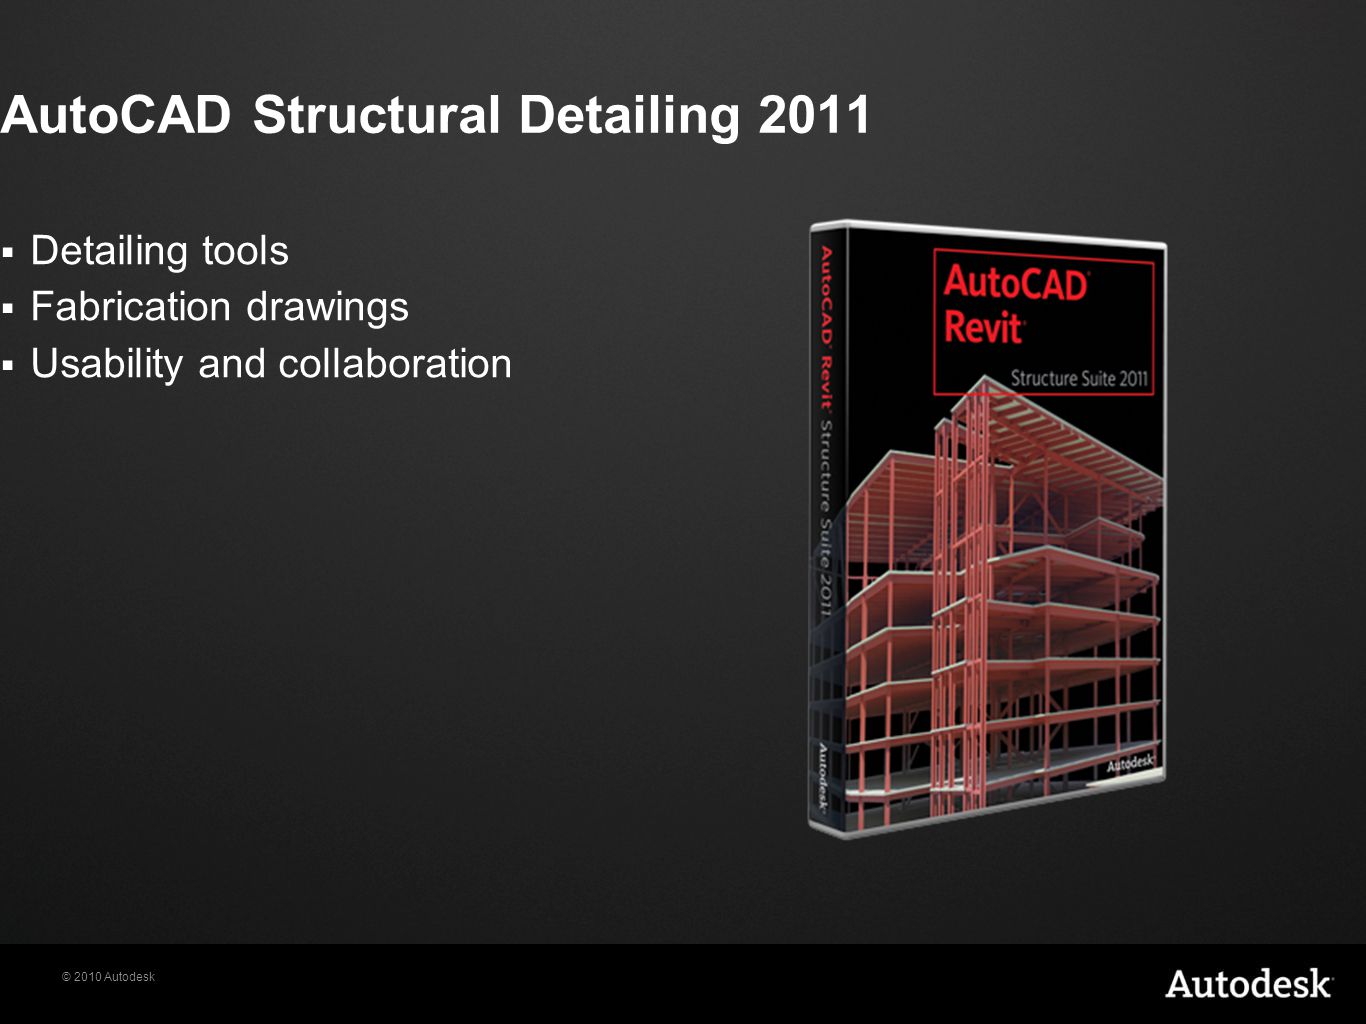 2010 Autodesk Autodesk ® Structural Engineering Solutions Robert Cauri  Structural Engineer. - ppt download